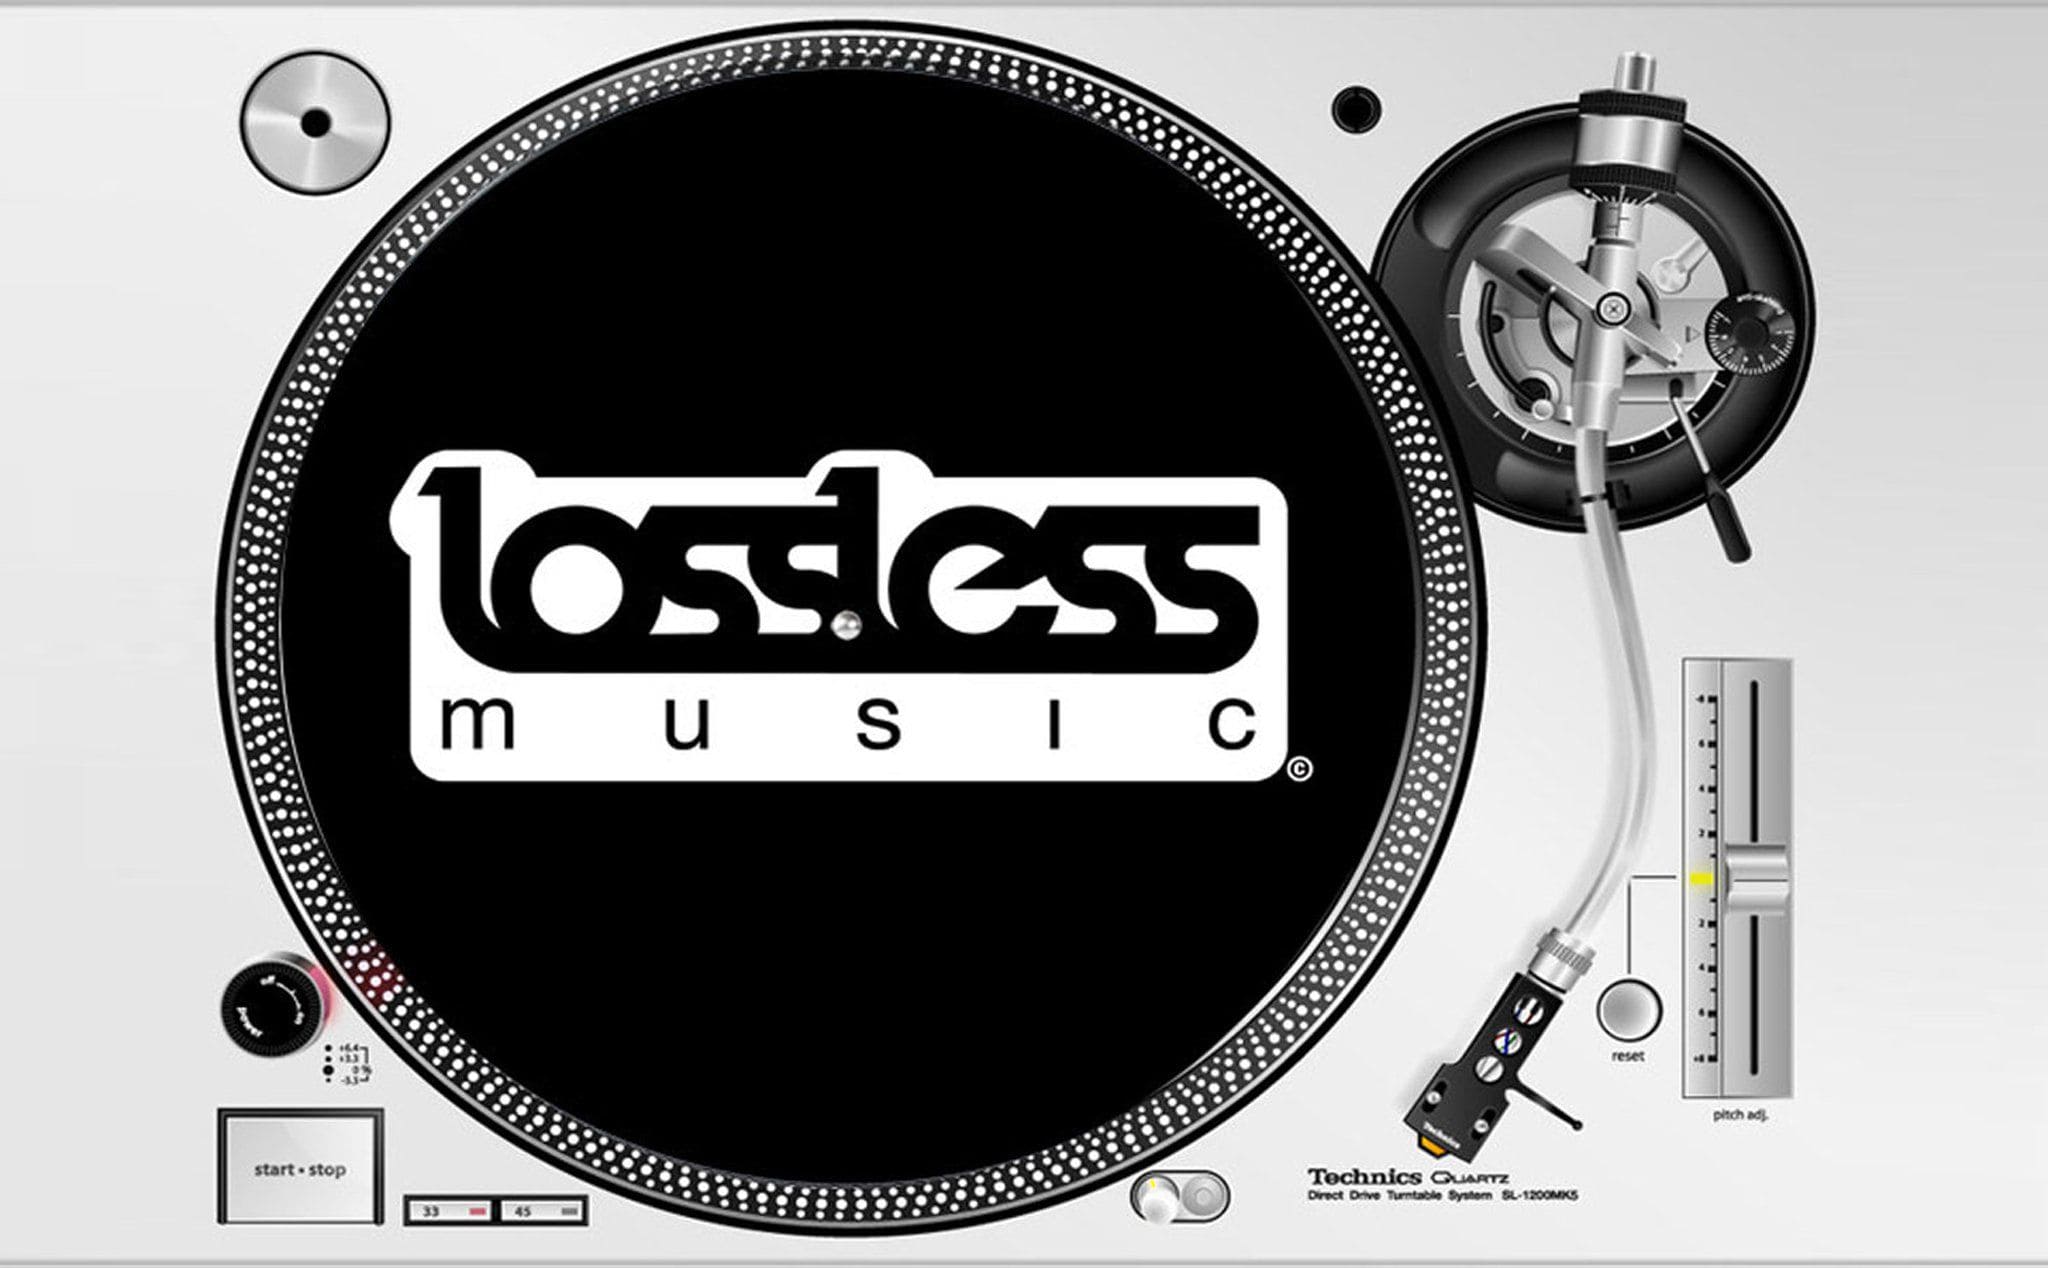 Музыка студийная flac слушать. Lossless Music. Lossless Audio. Lossless логотип. Lossless музыка слушать.